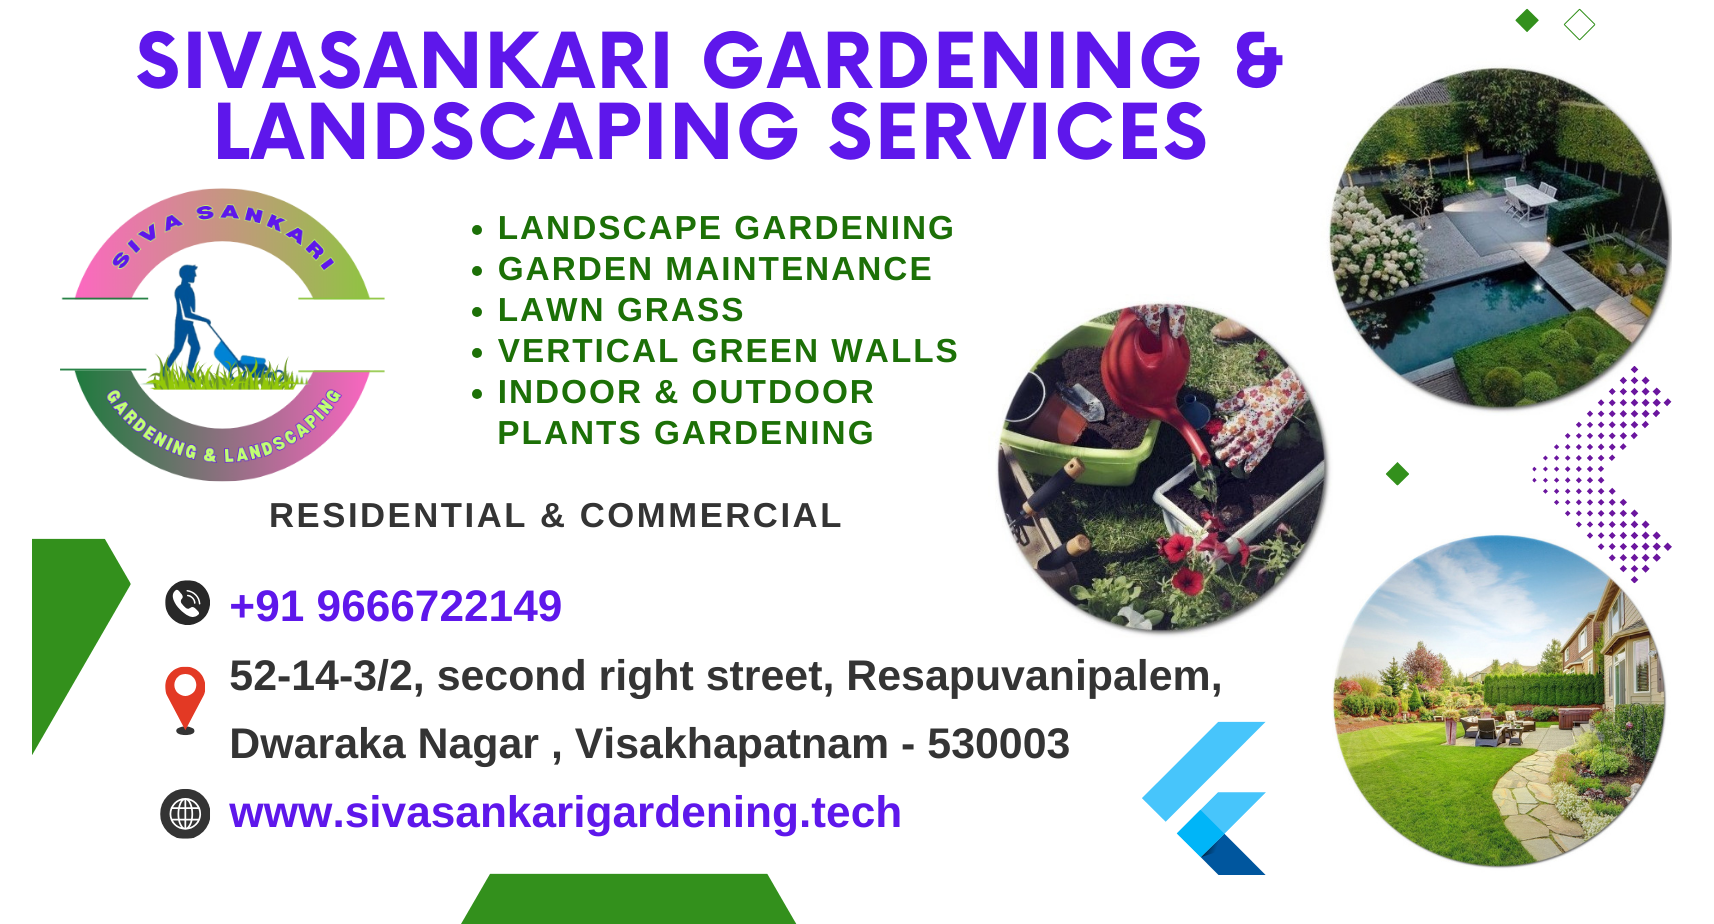 Sivasankari Gardening & Landscaping Services